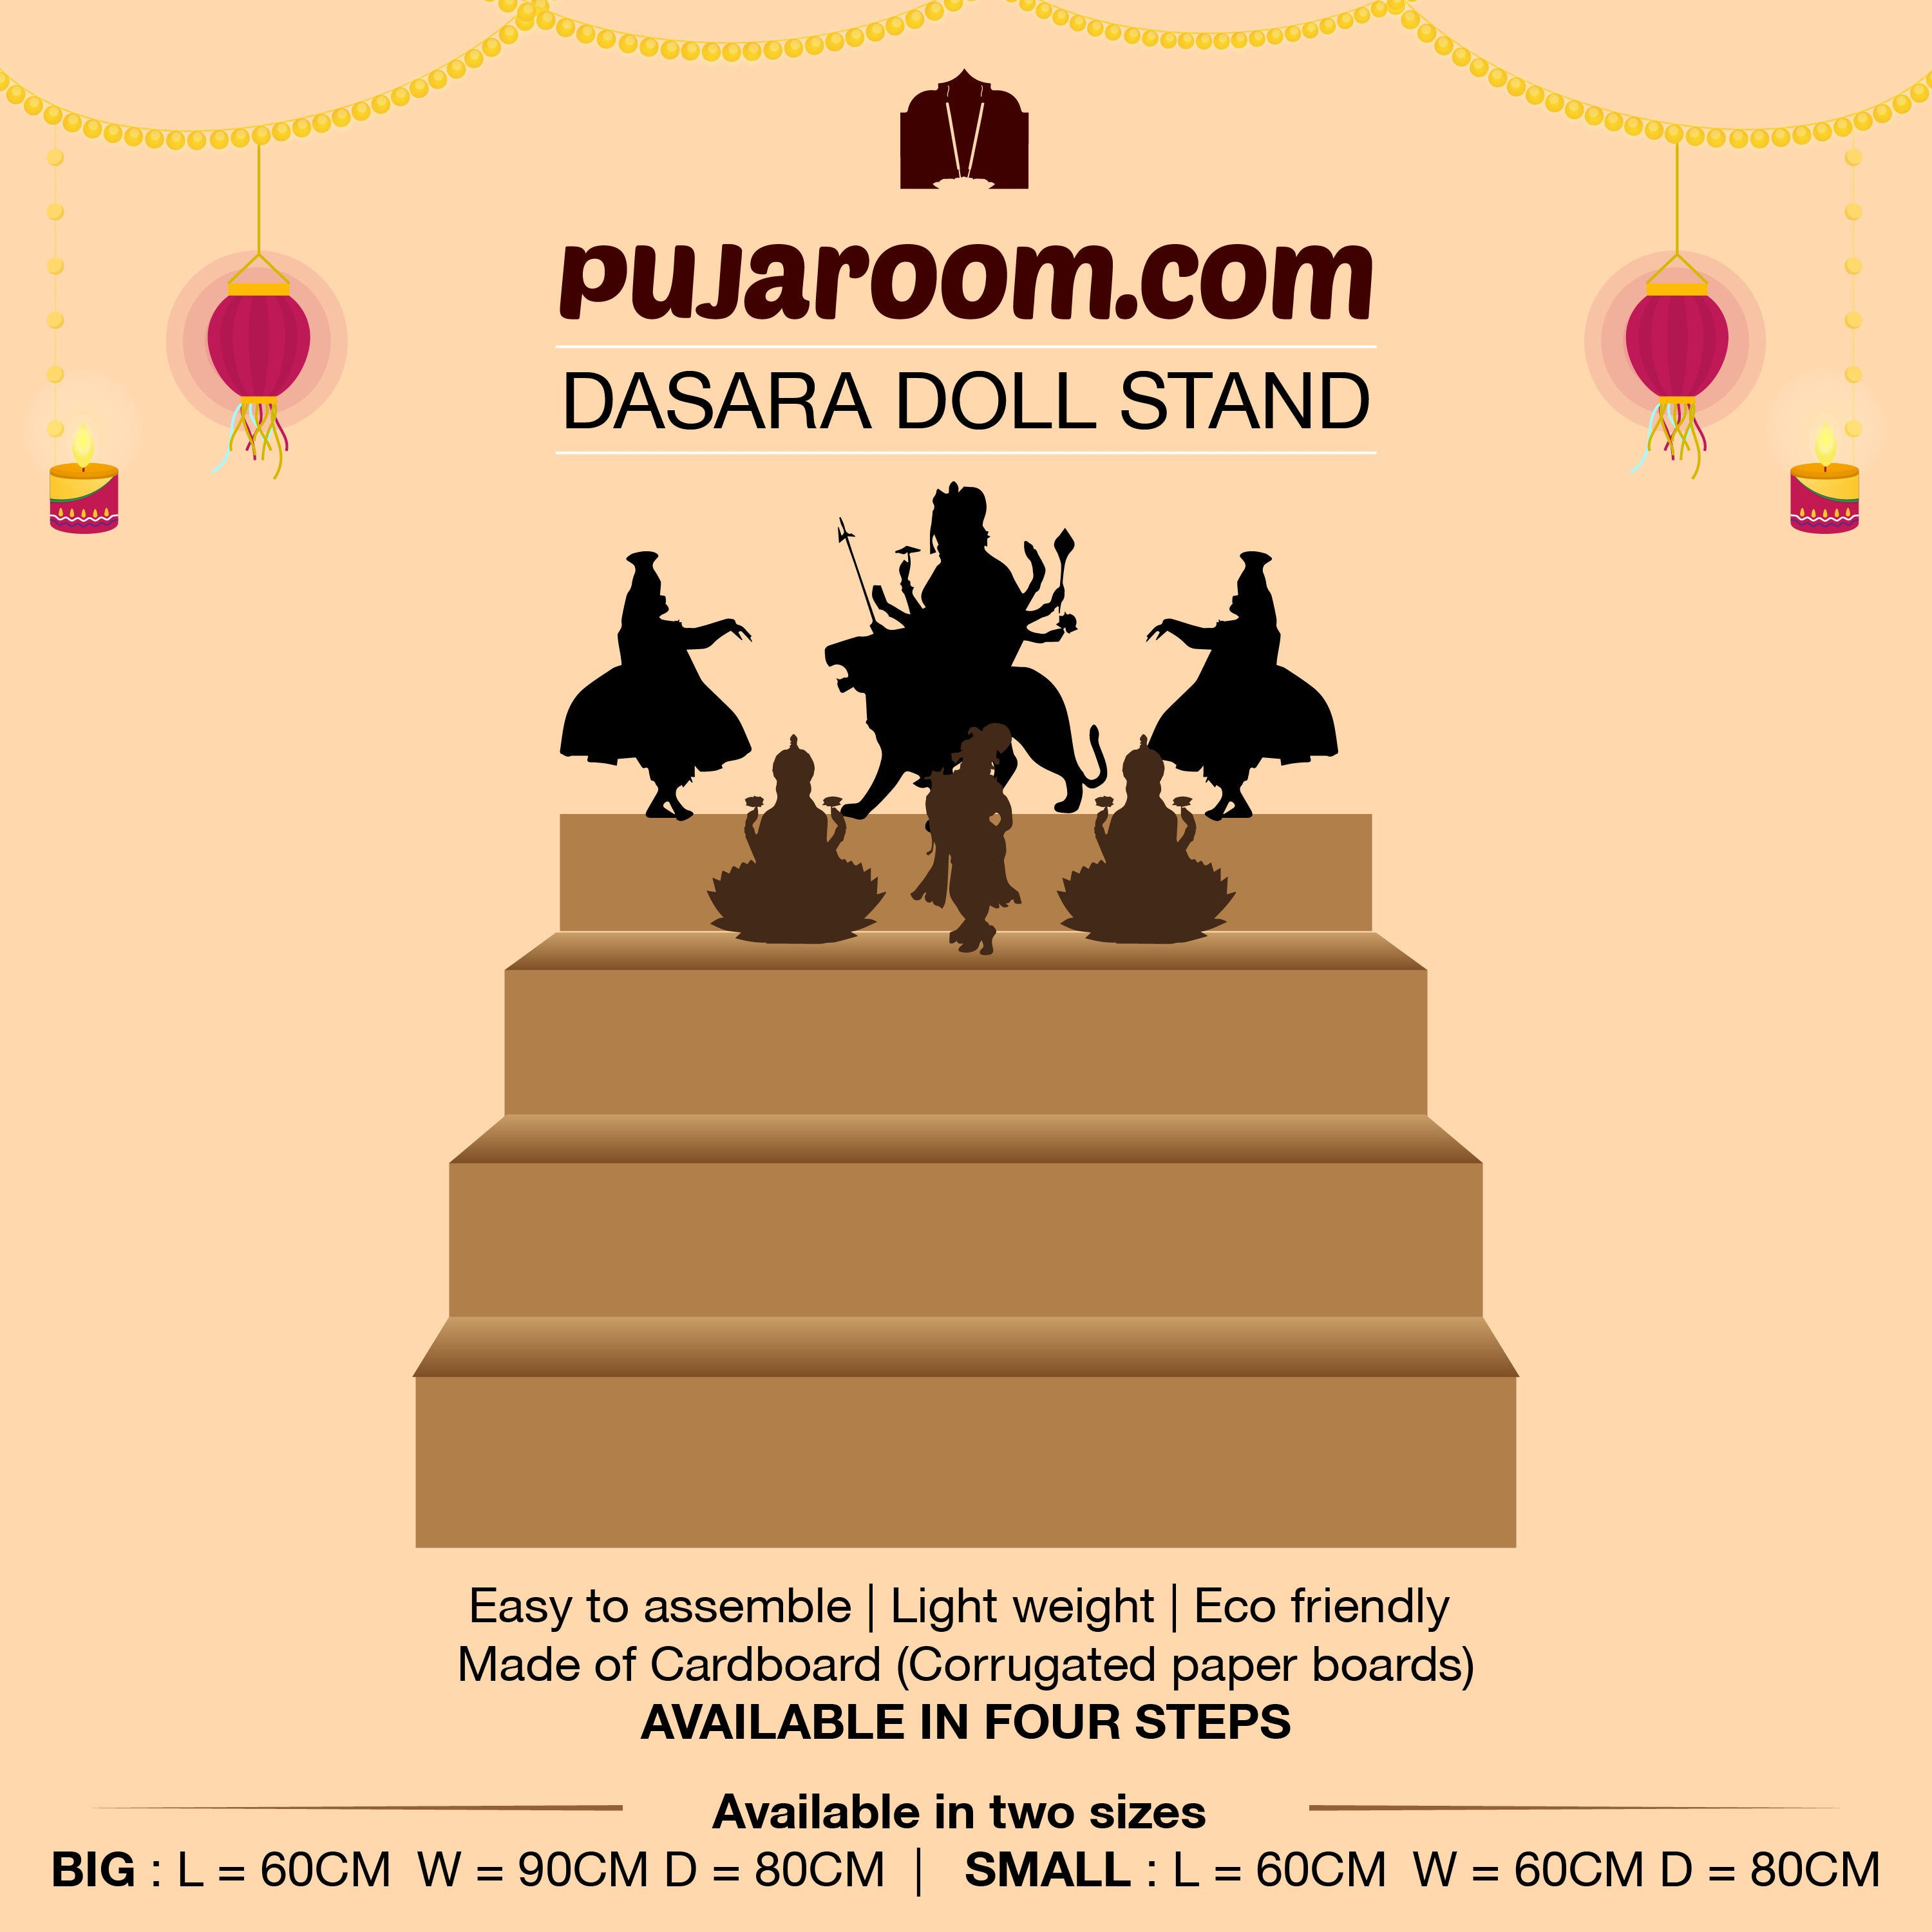 Dasara Doll Stand